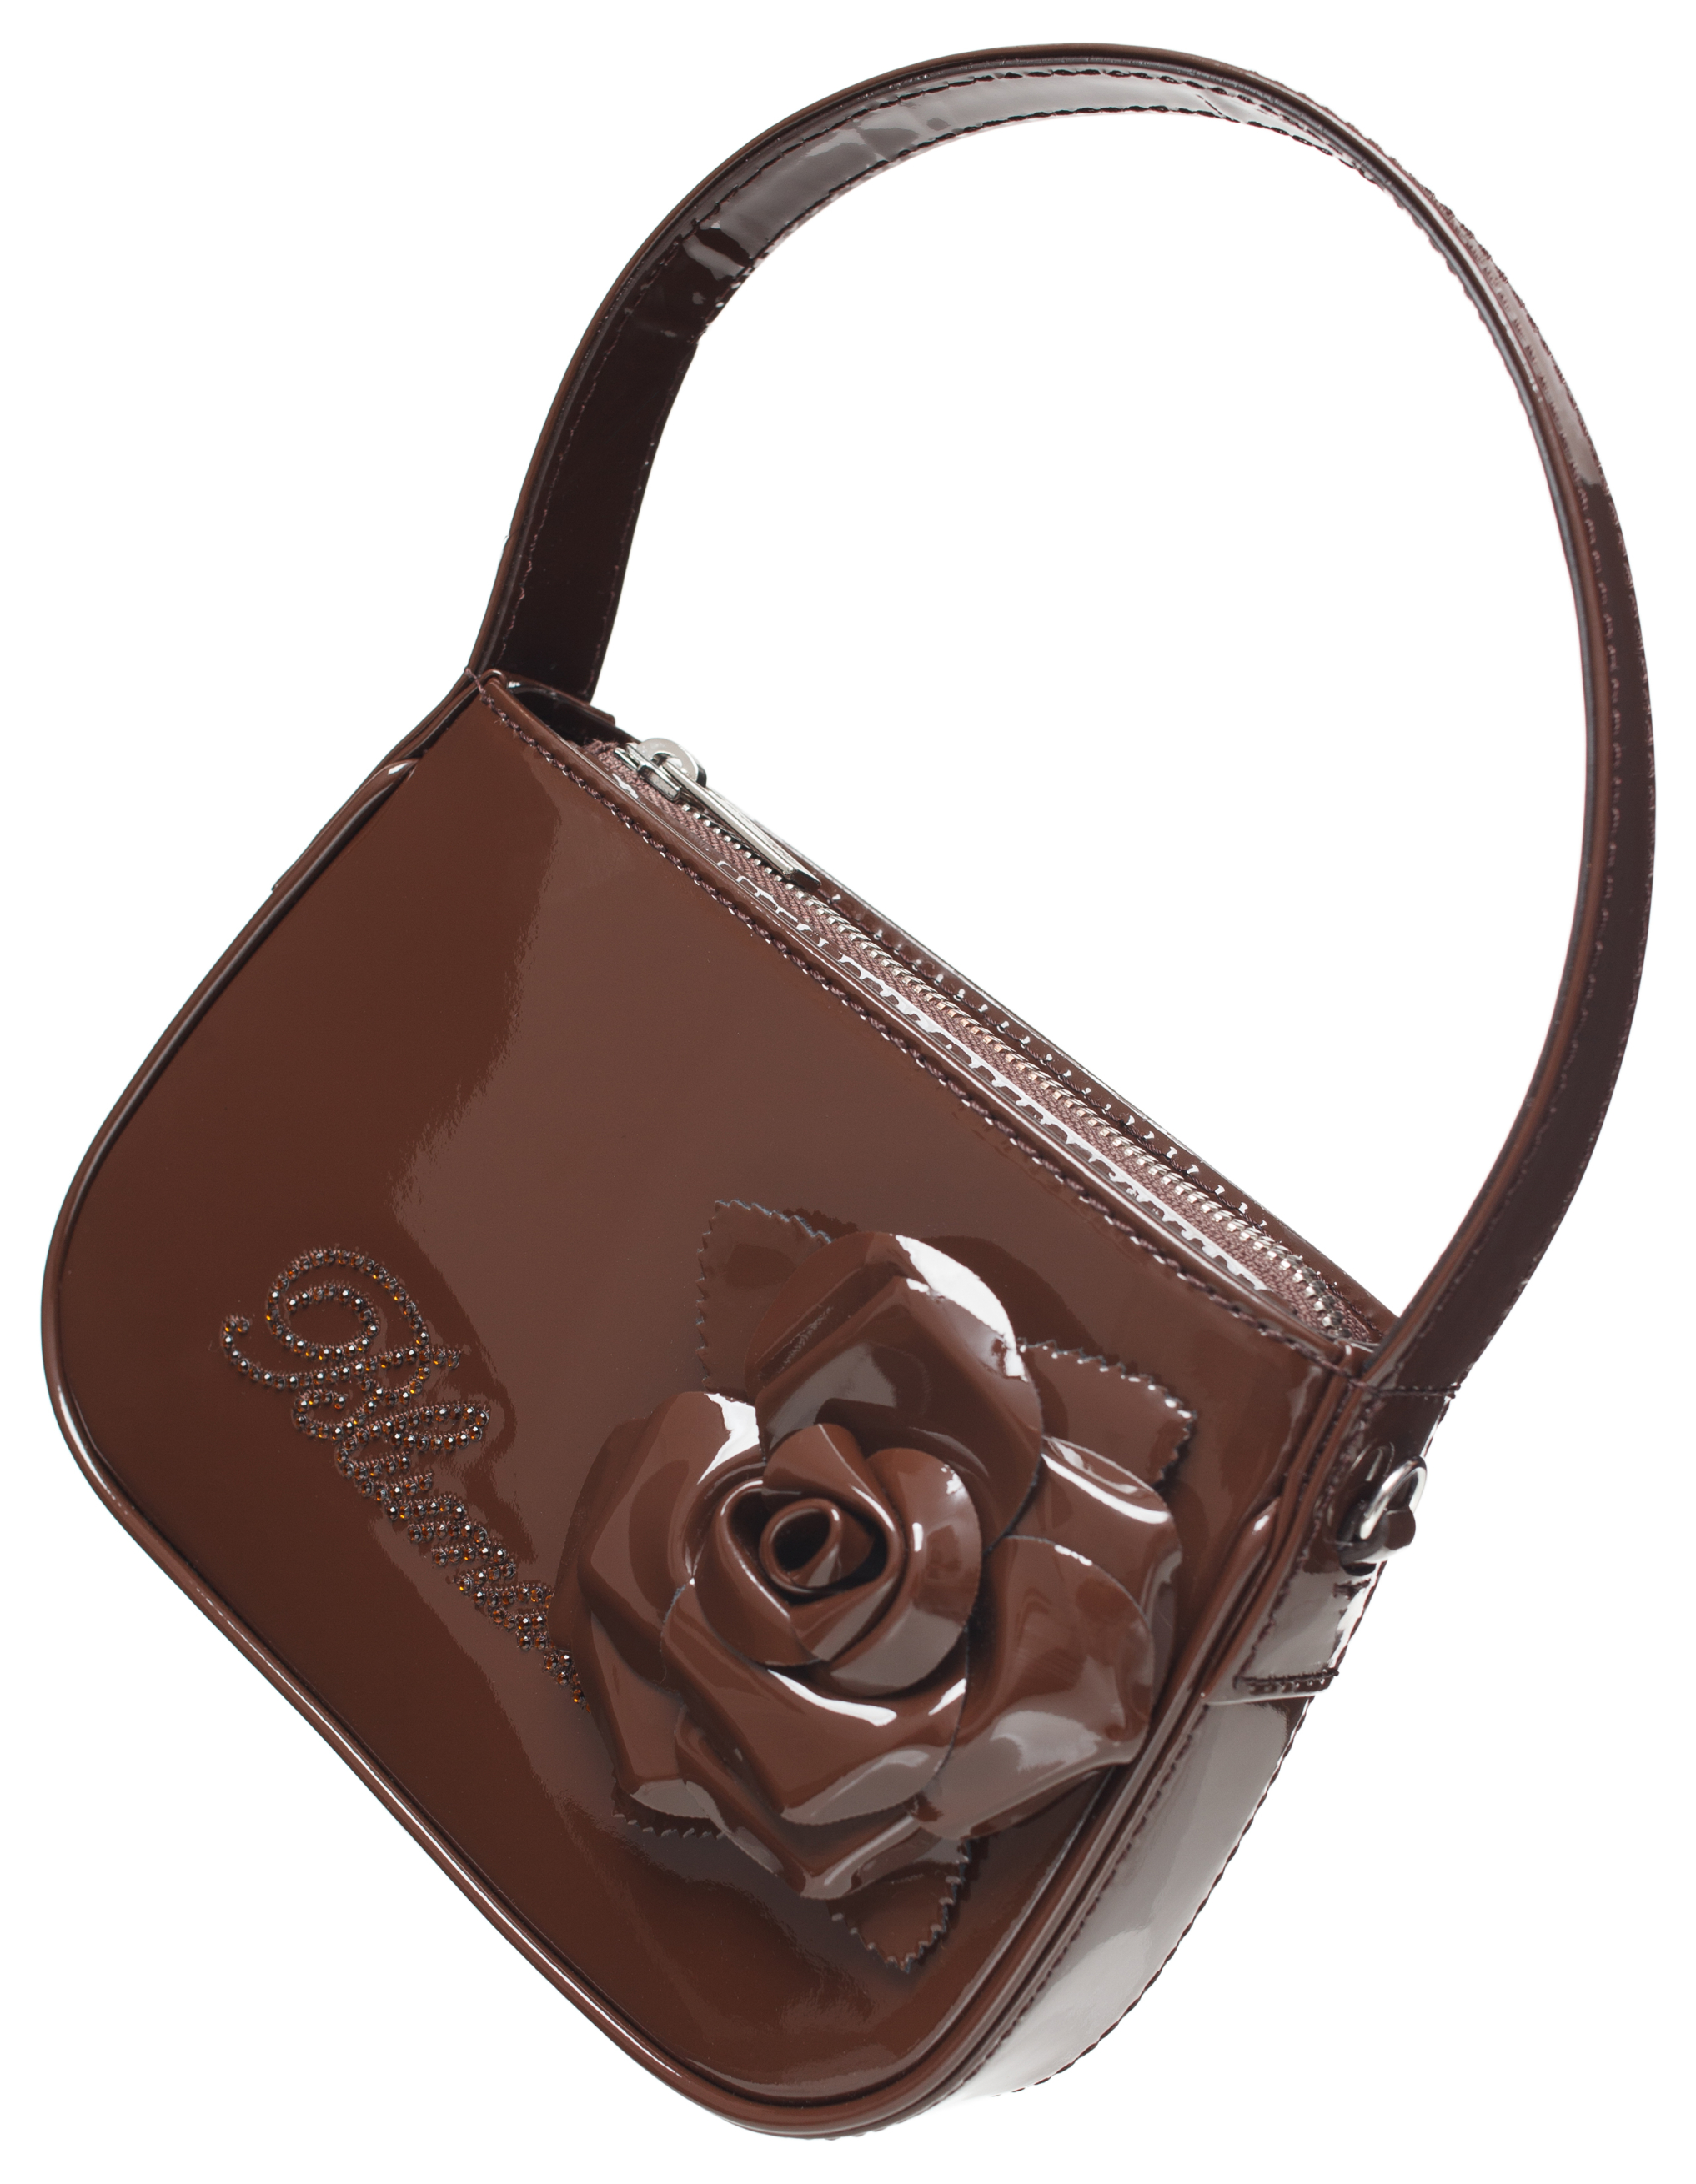 Blumarine Borsa Mini Bag With Rose In Brown